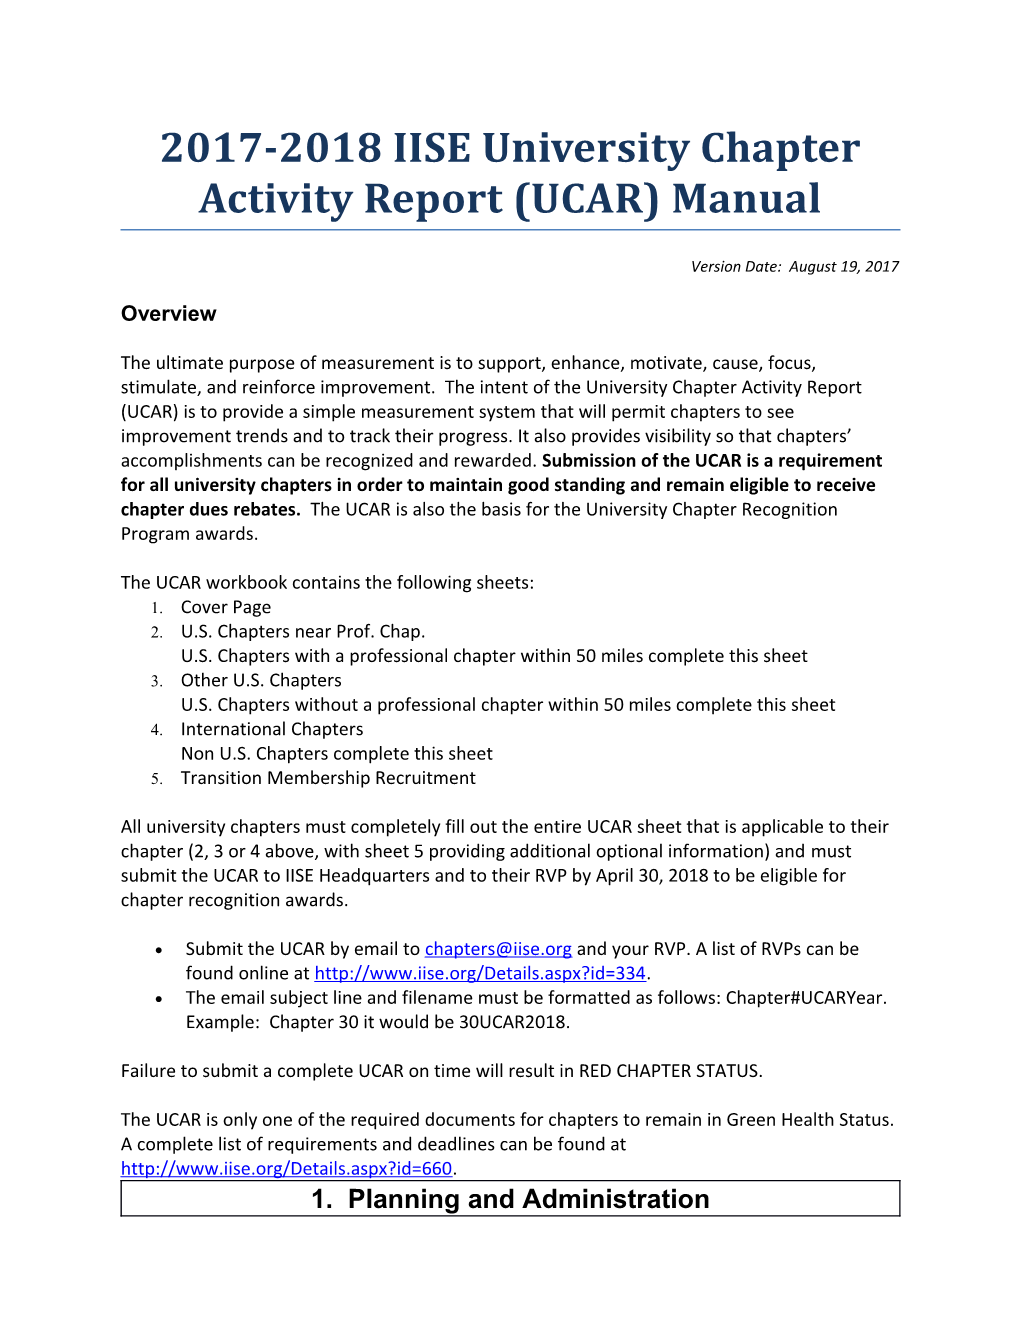 2017-2018IISE University Chapter Activity Report (UCAR) Manual